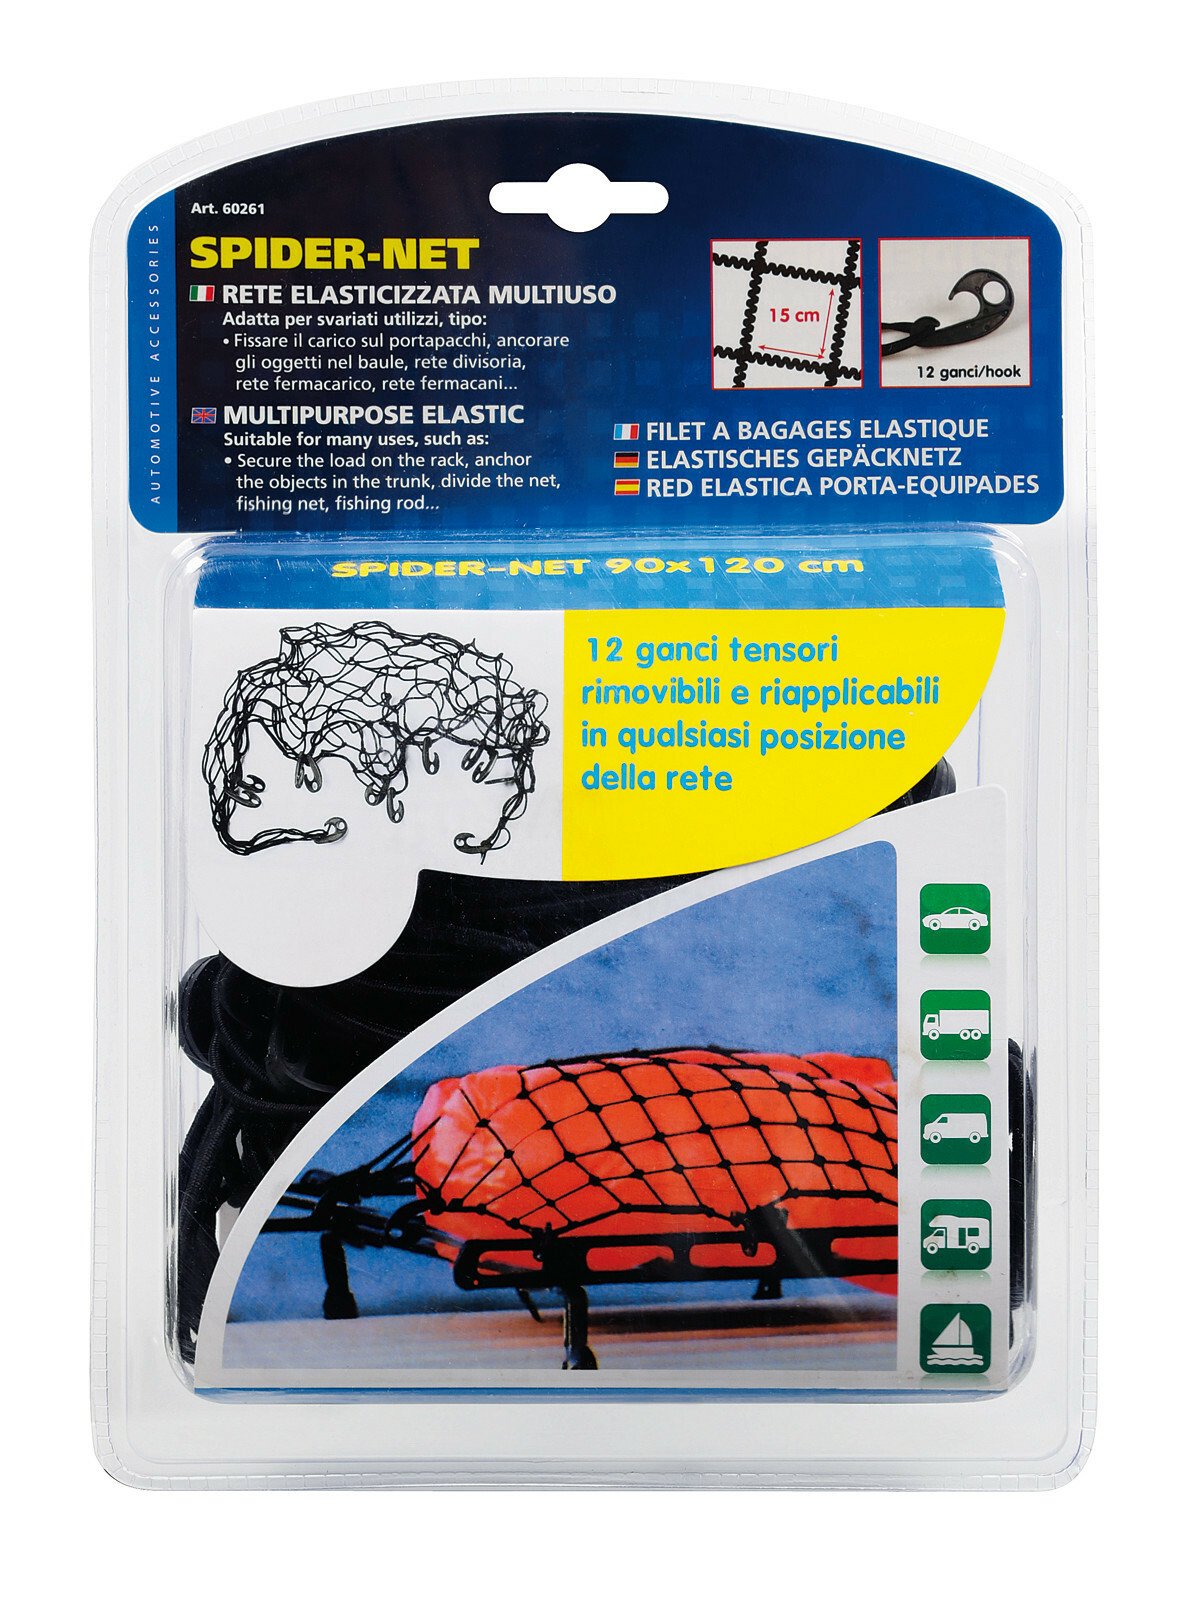 Plasa pentru fixat bagaje 90x120cm Spider-Net thumb